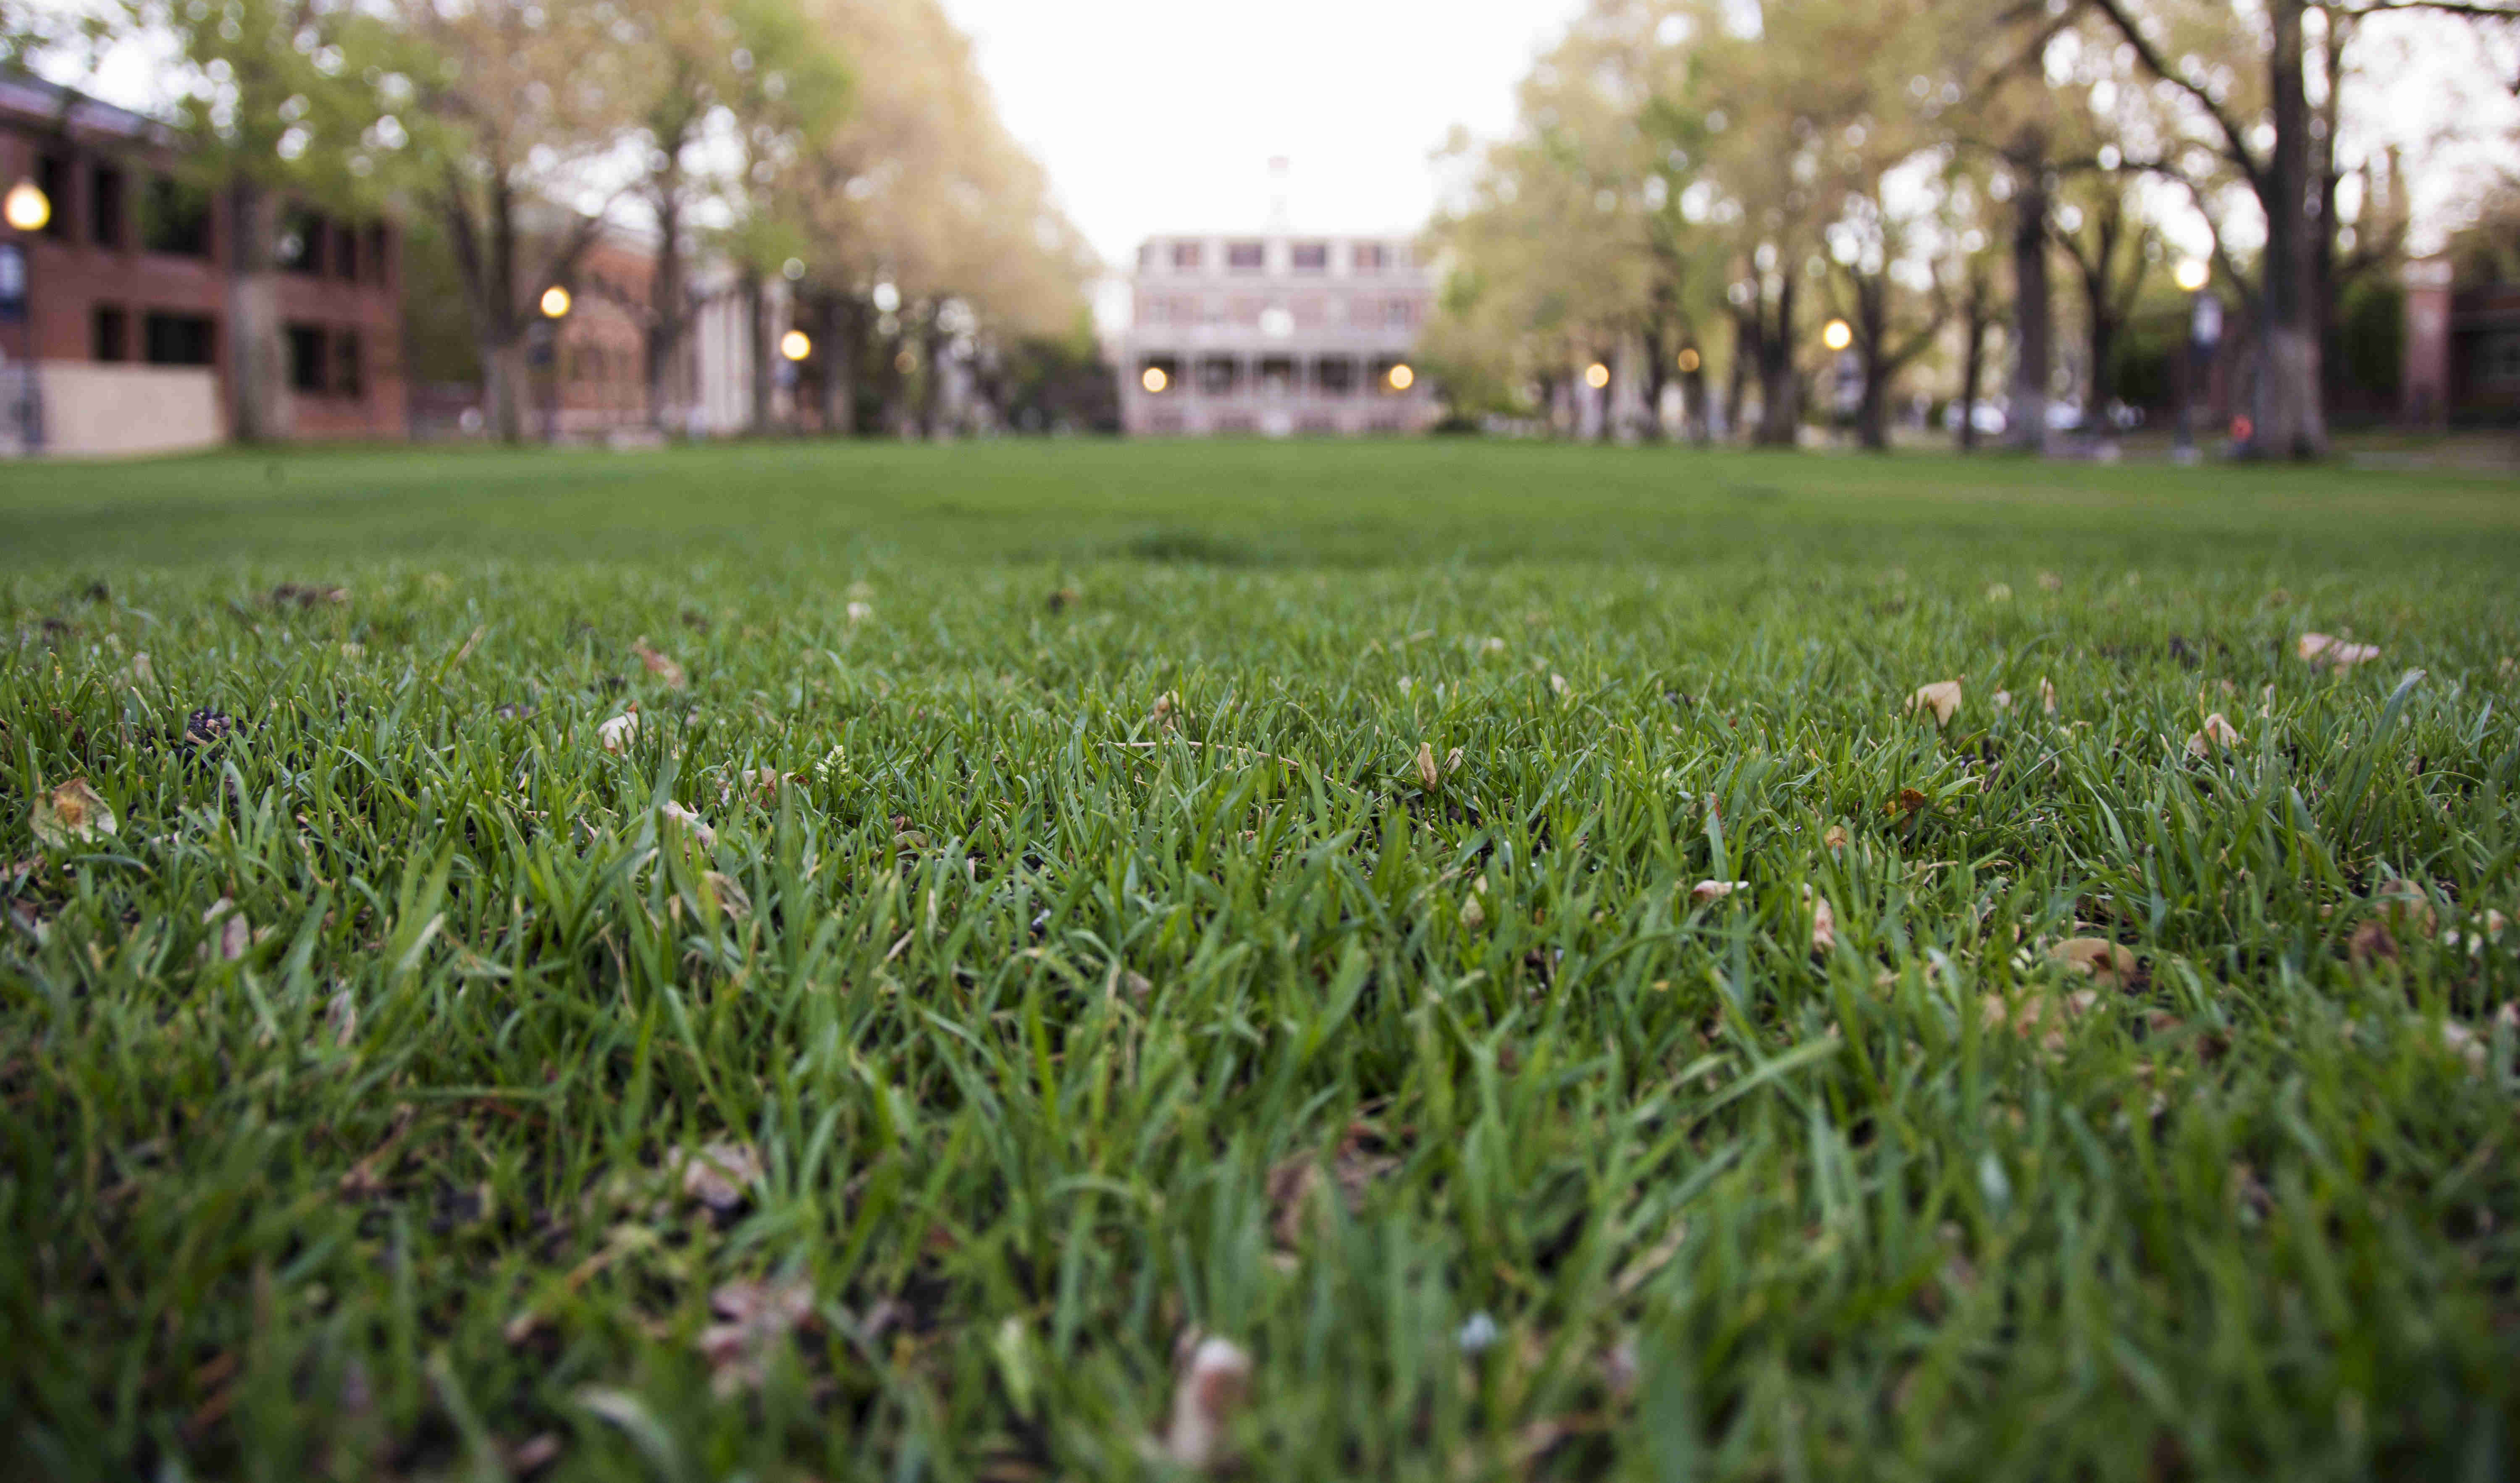 Grass on university quad